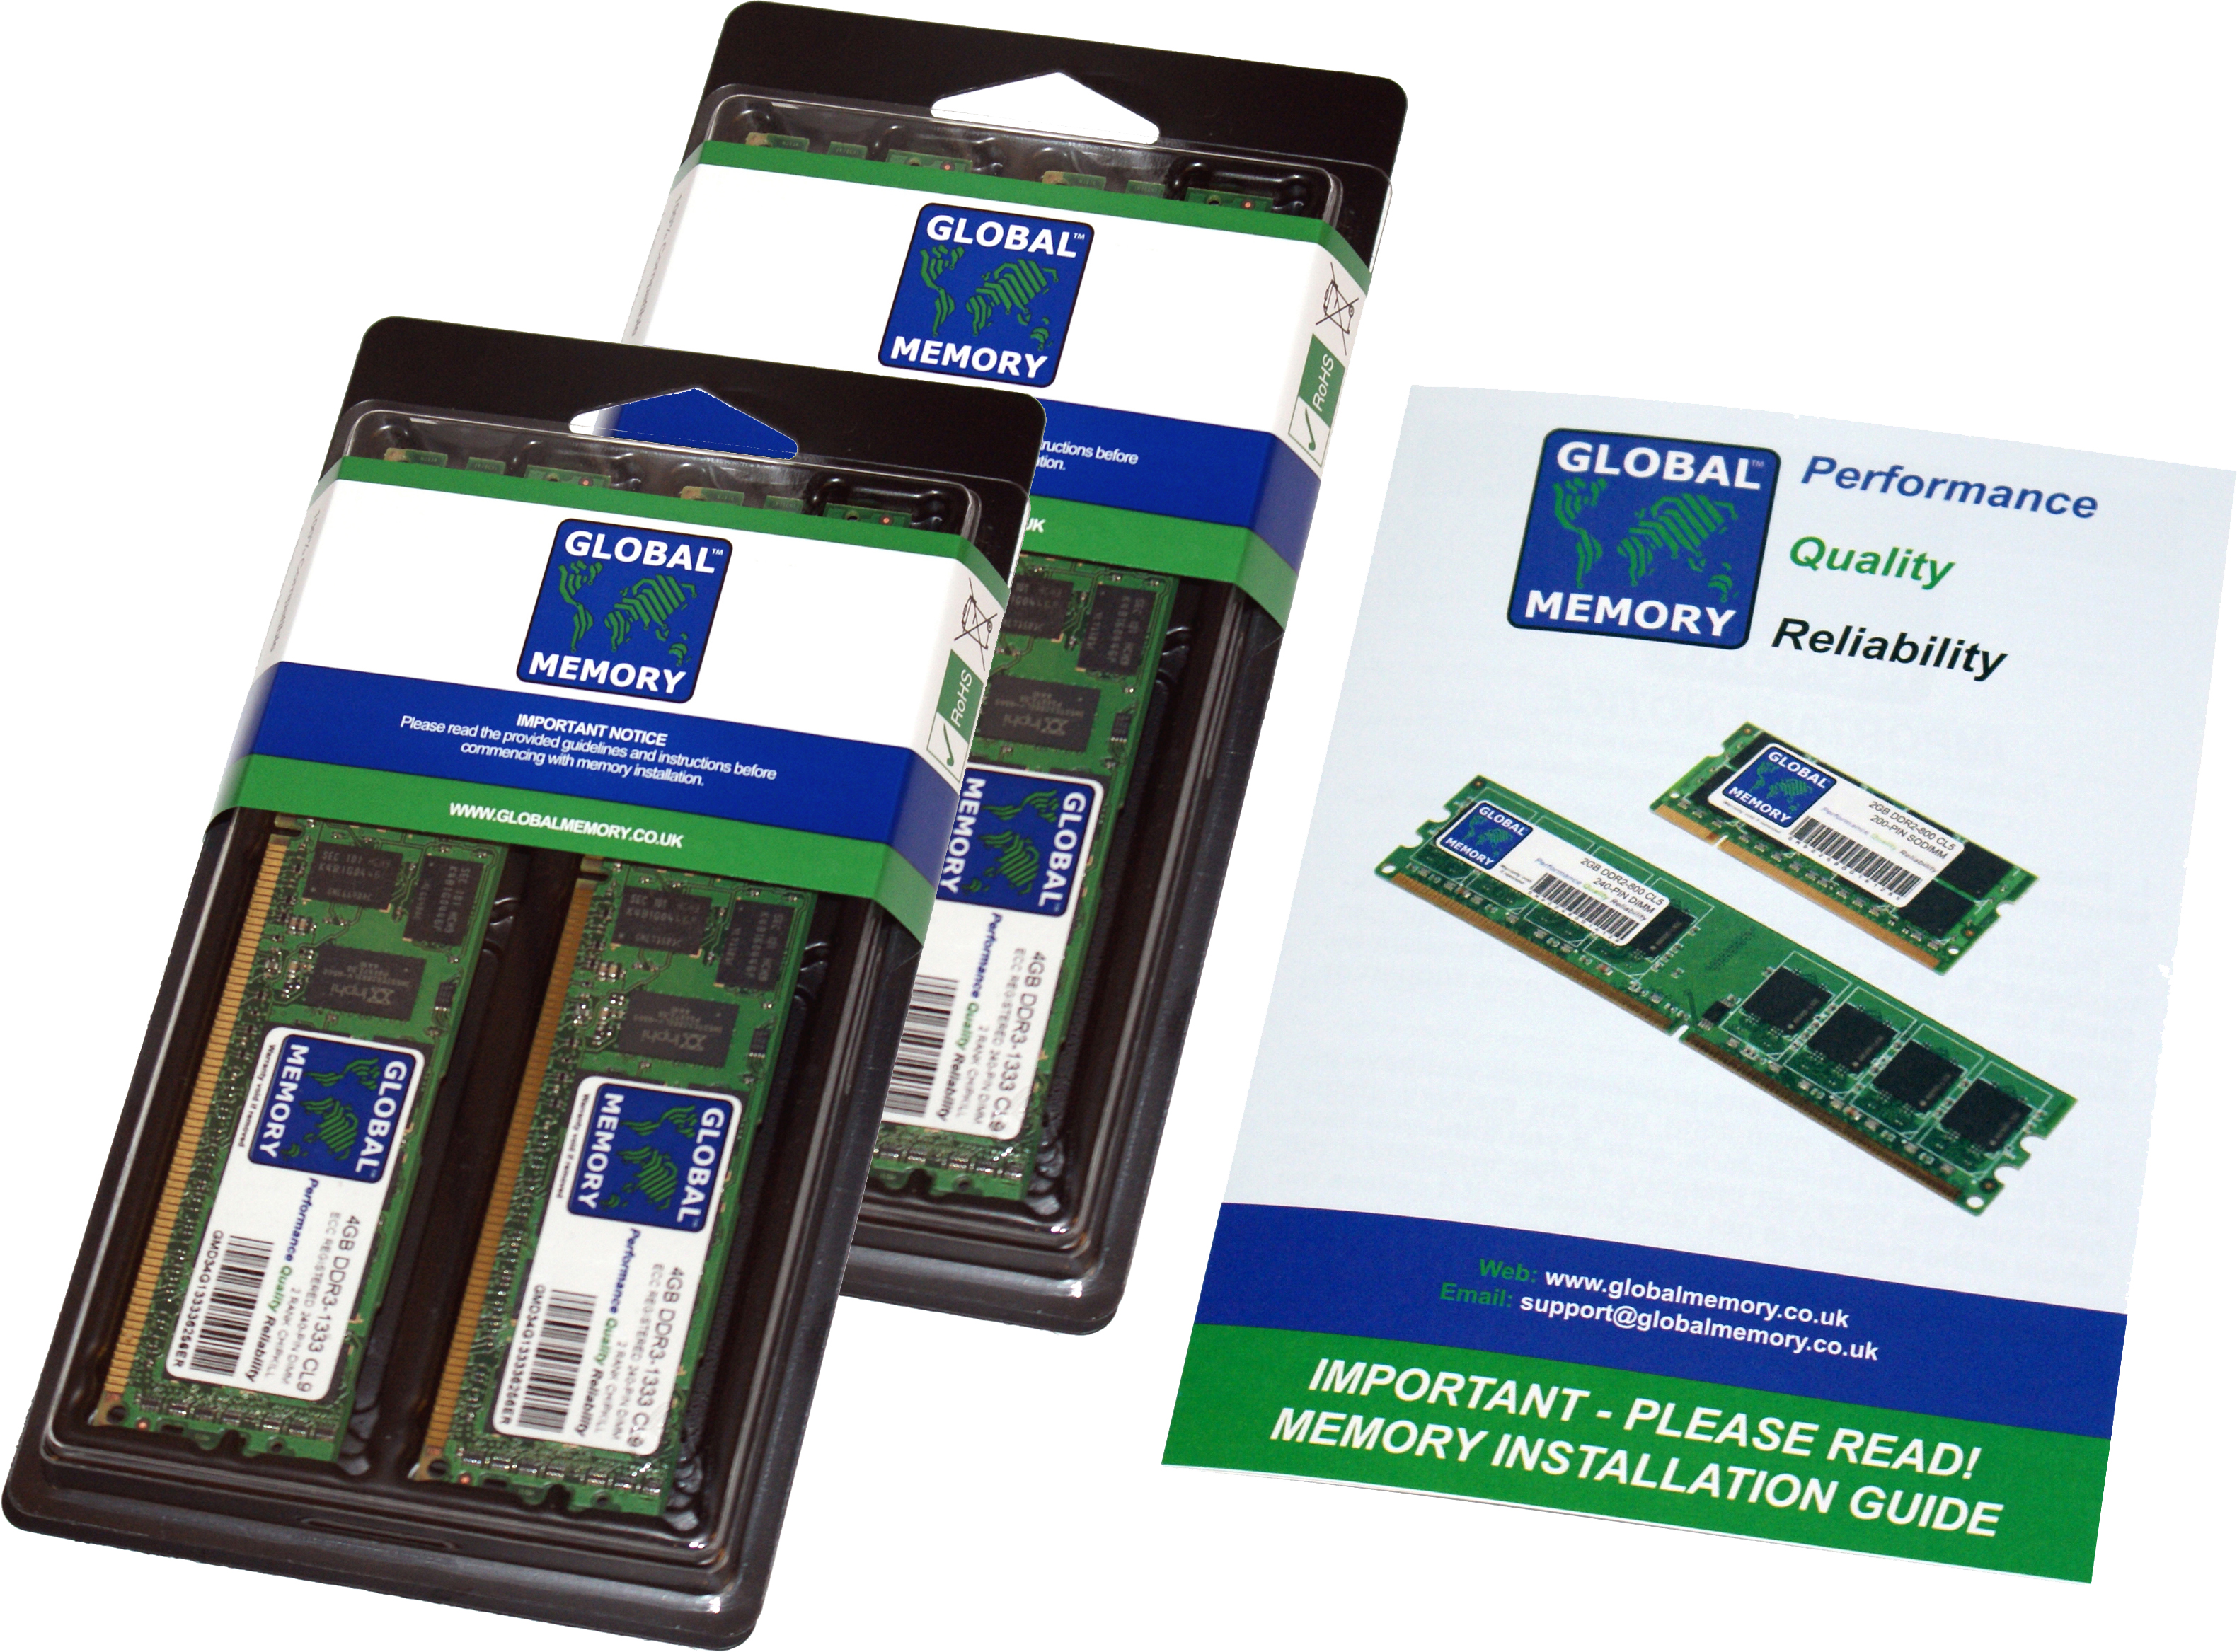 128GB (4 x 32GB) DDR4 2133MHz PC4-17000 288-PIN ECC REGISTERED DIMM (RDIMM) MEMORY RAM KIT FOR SUN SERVERS/WORKSTATIONS (8 RANK KIT CHIPKILL)